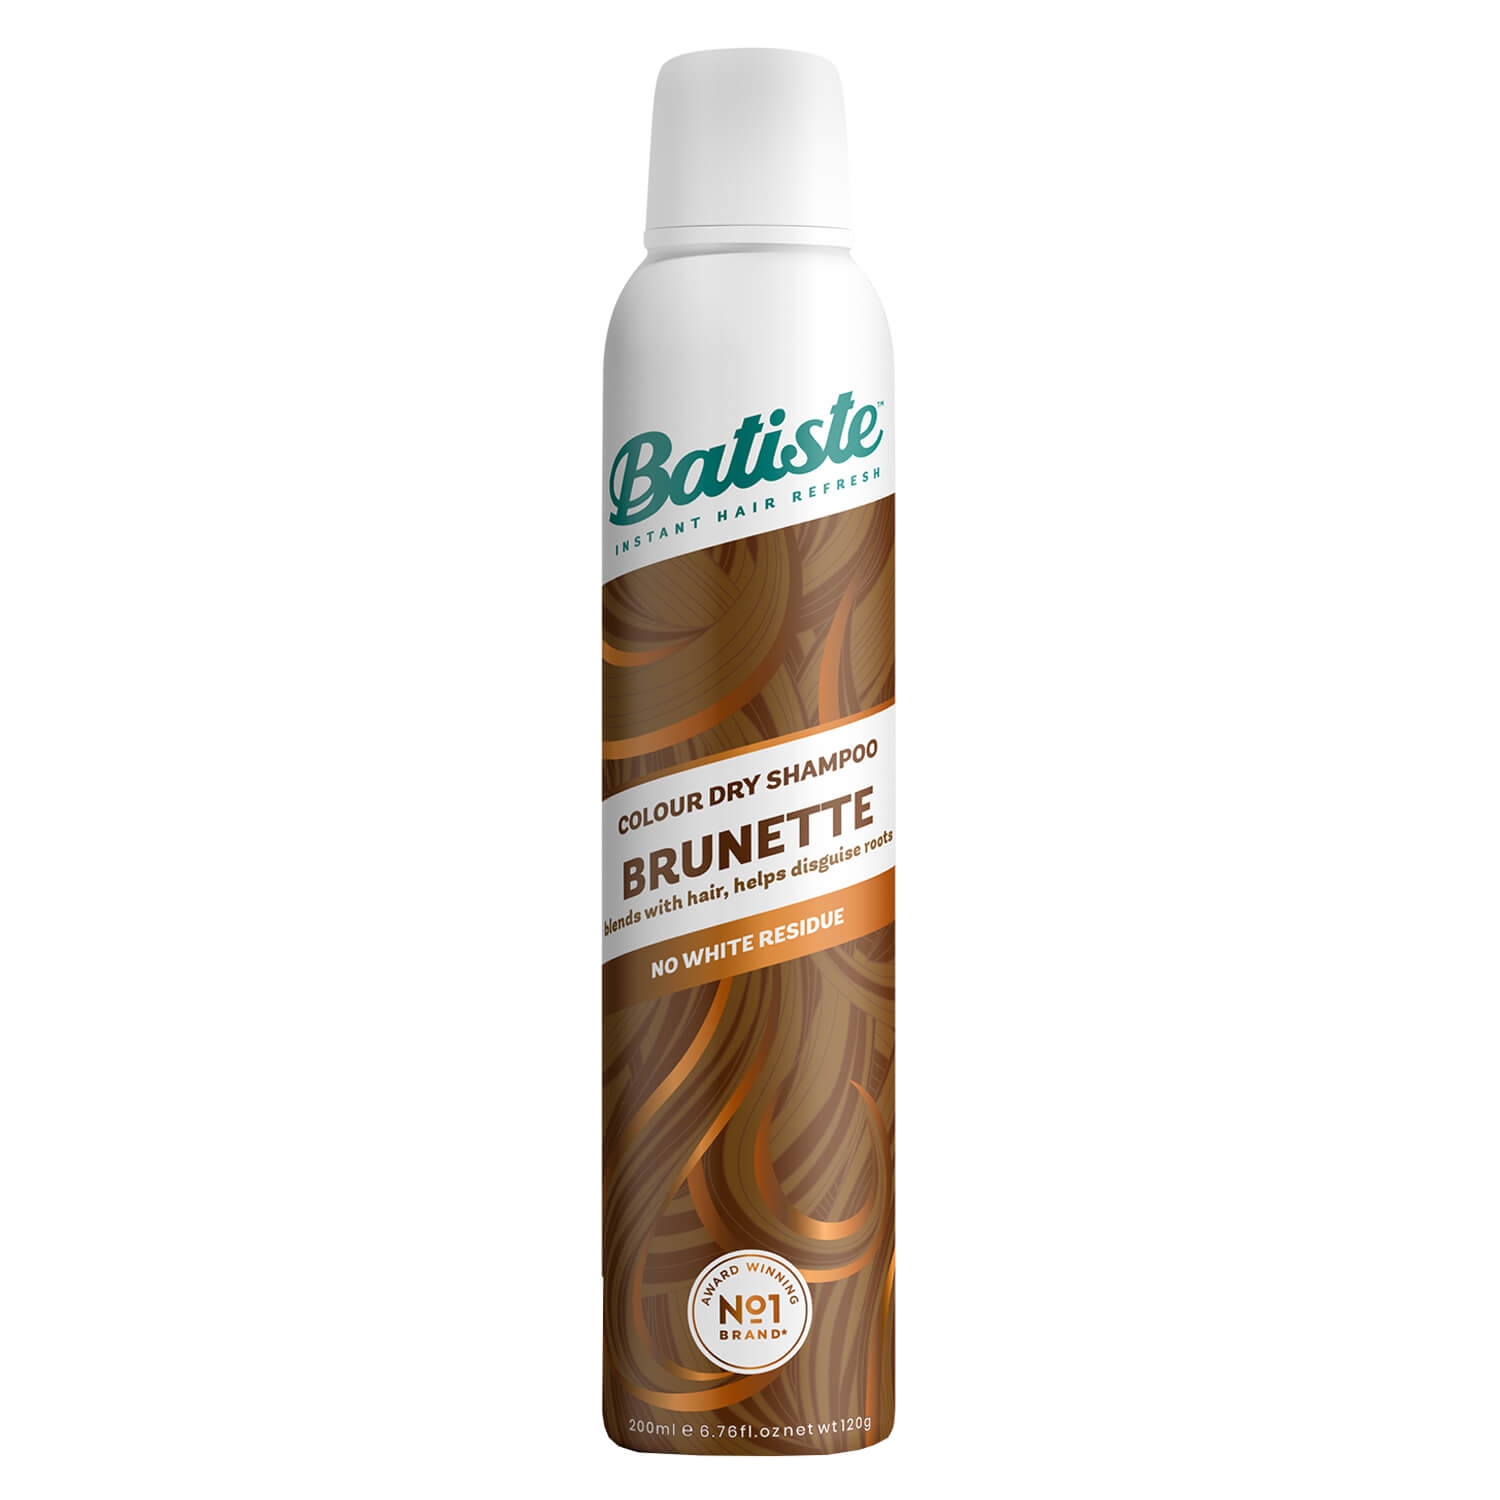 Product image from Batiste - Brunette